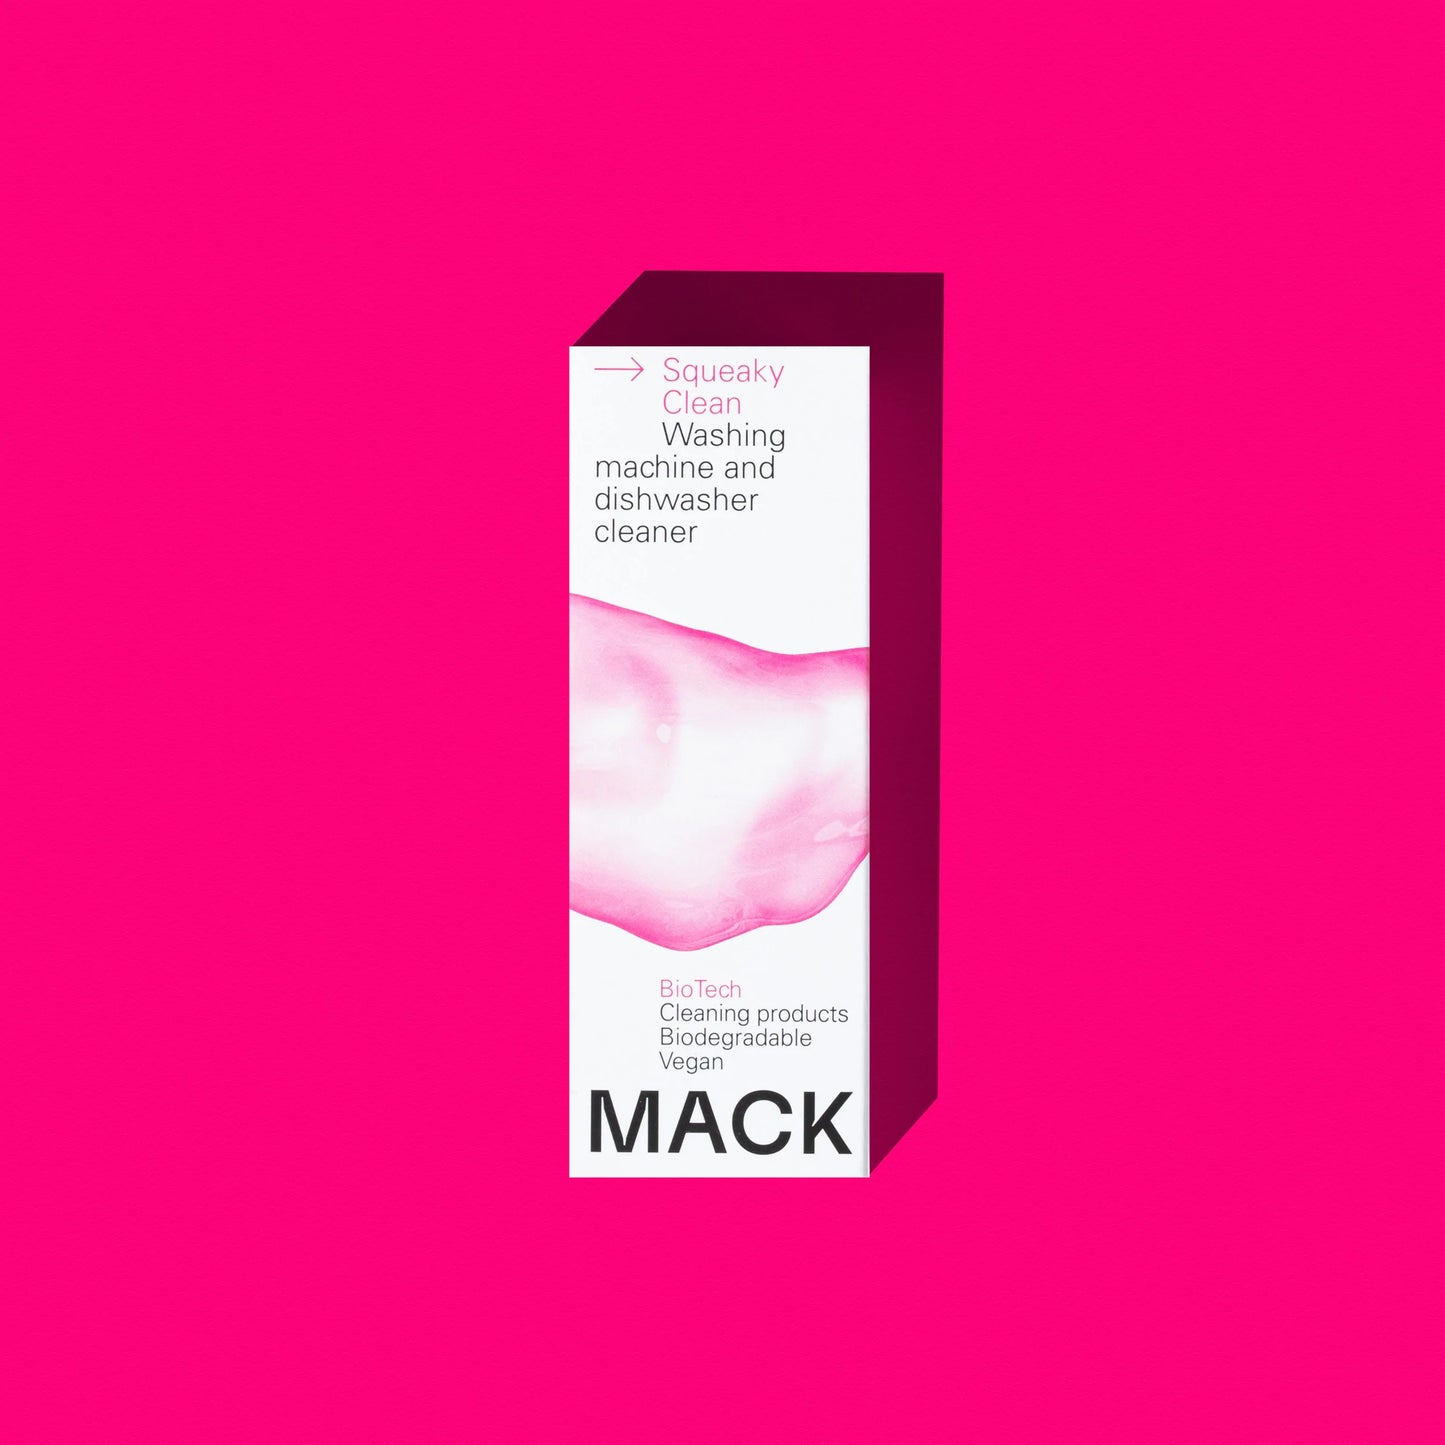 MACK Squeaky Clean BioPod - cleaner cleaner